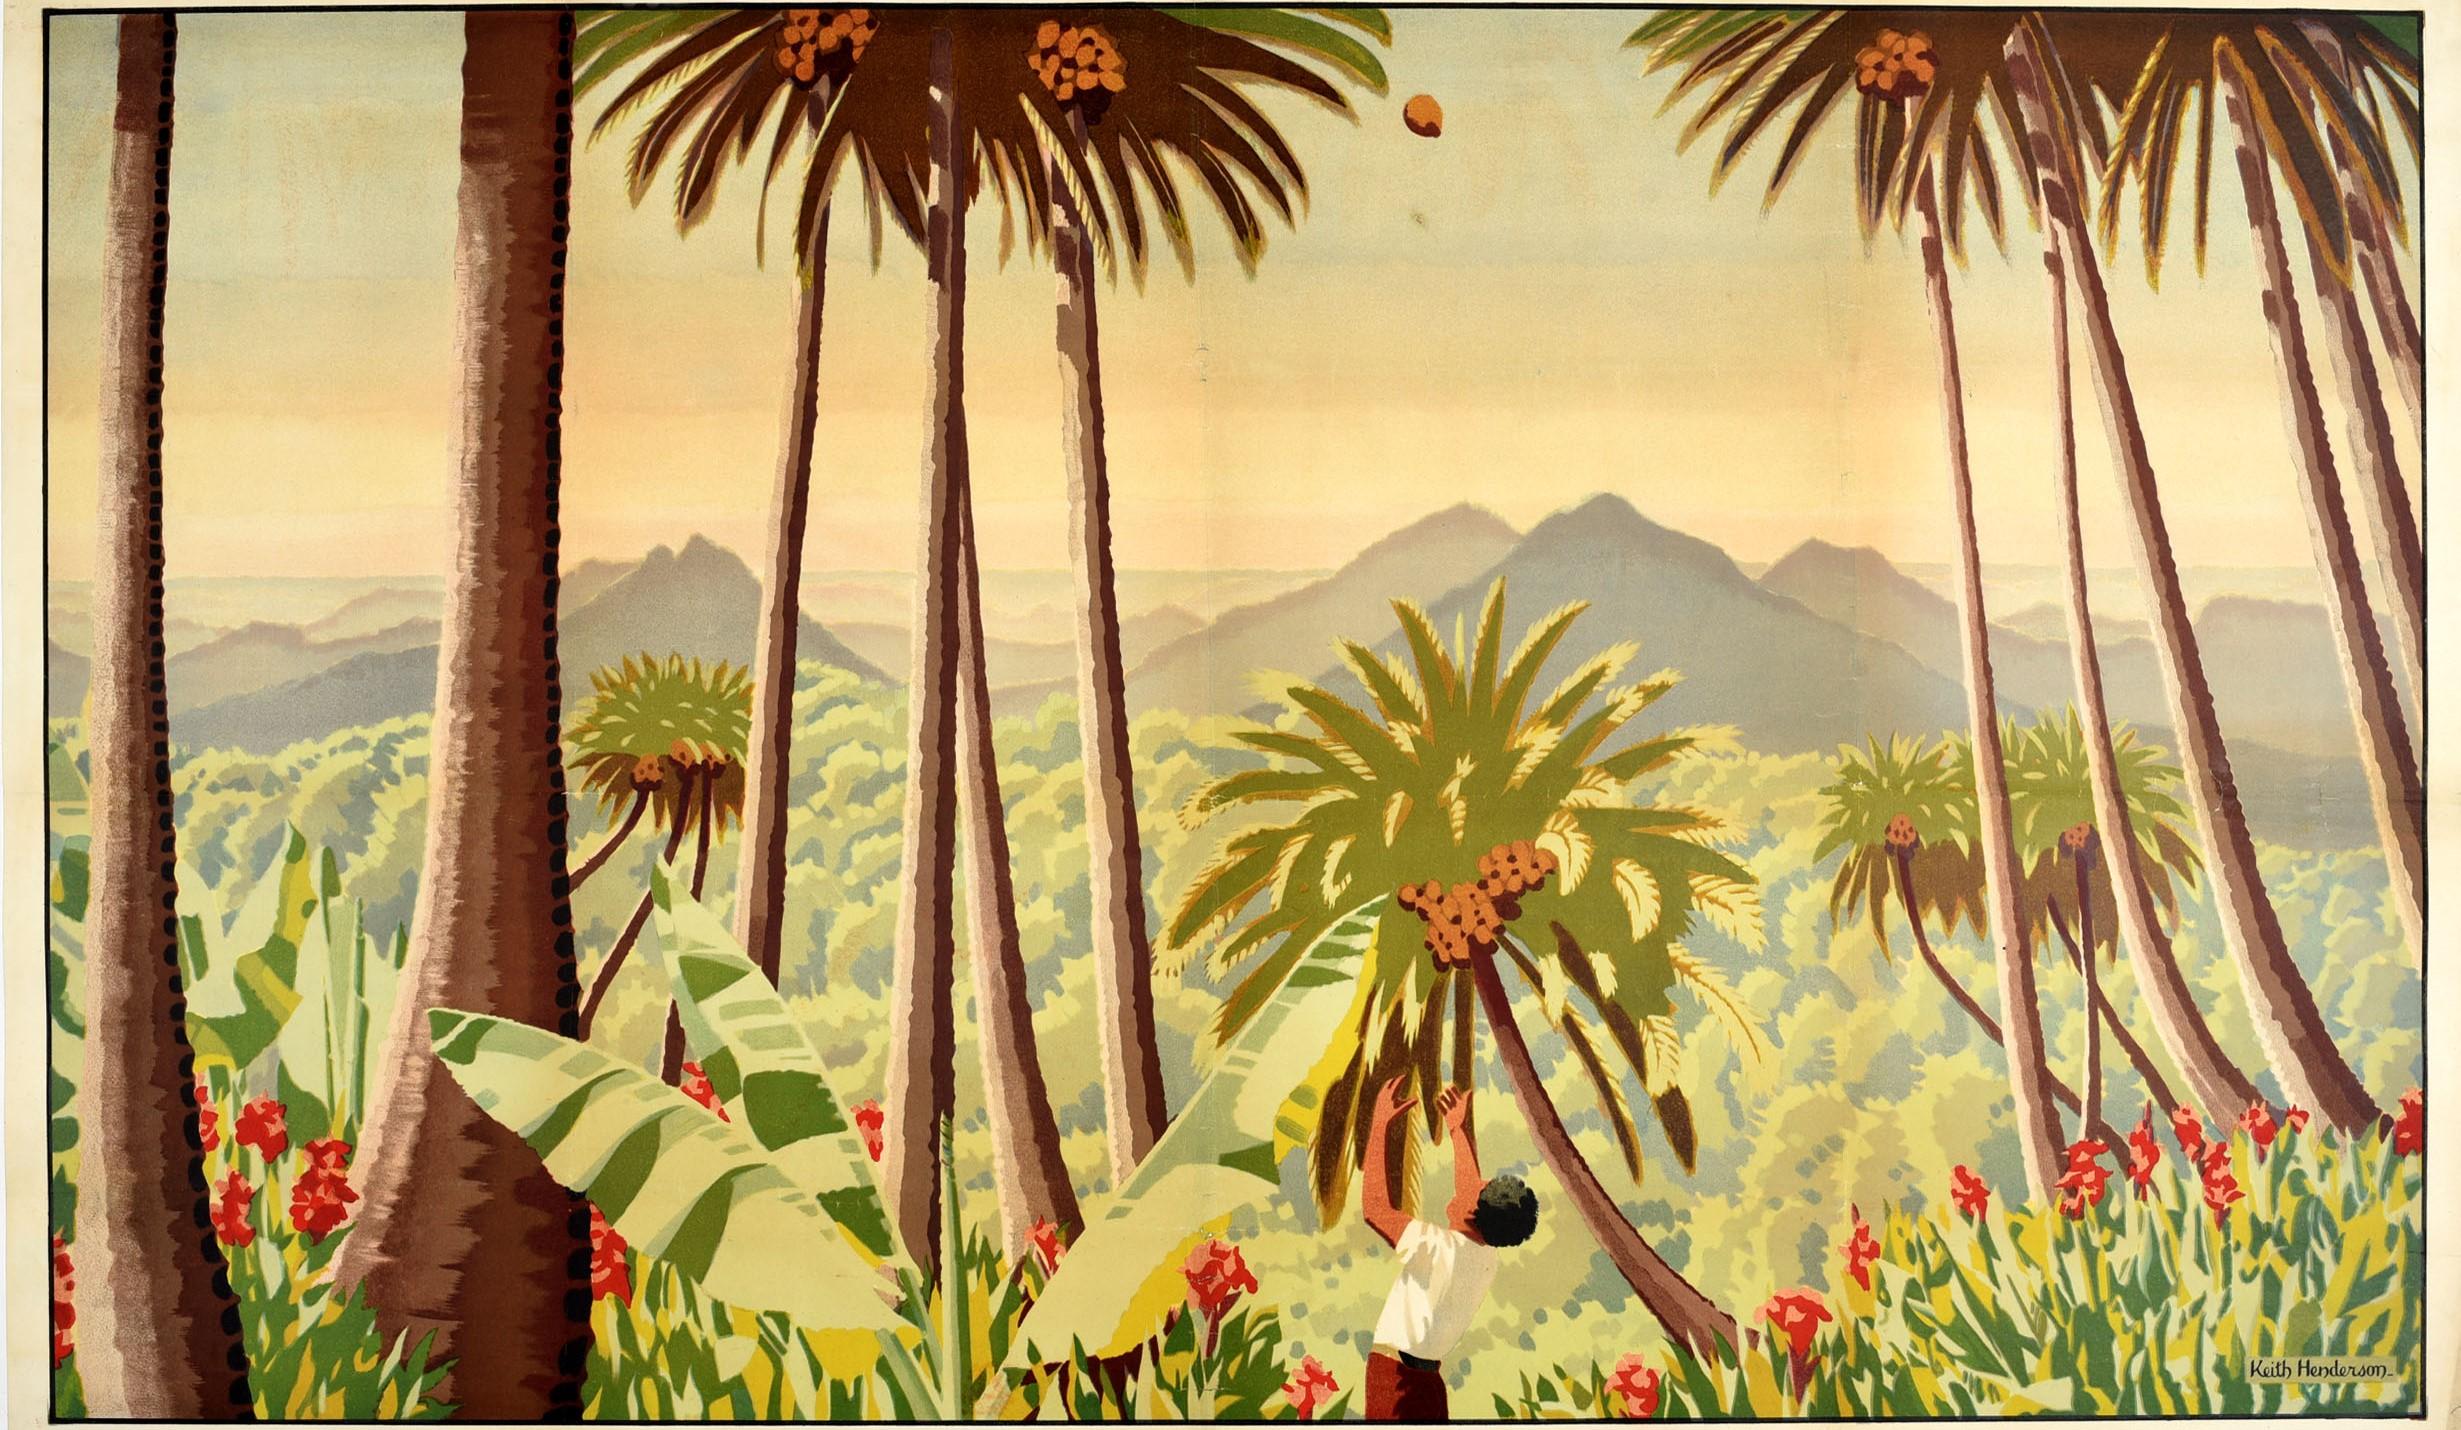 Original Vintage Empire Marketing Board Poster Fiji Copra Pineapple Banana Sugar - Print by Keith Henderson